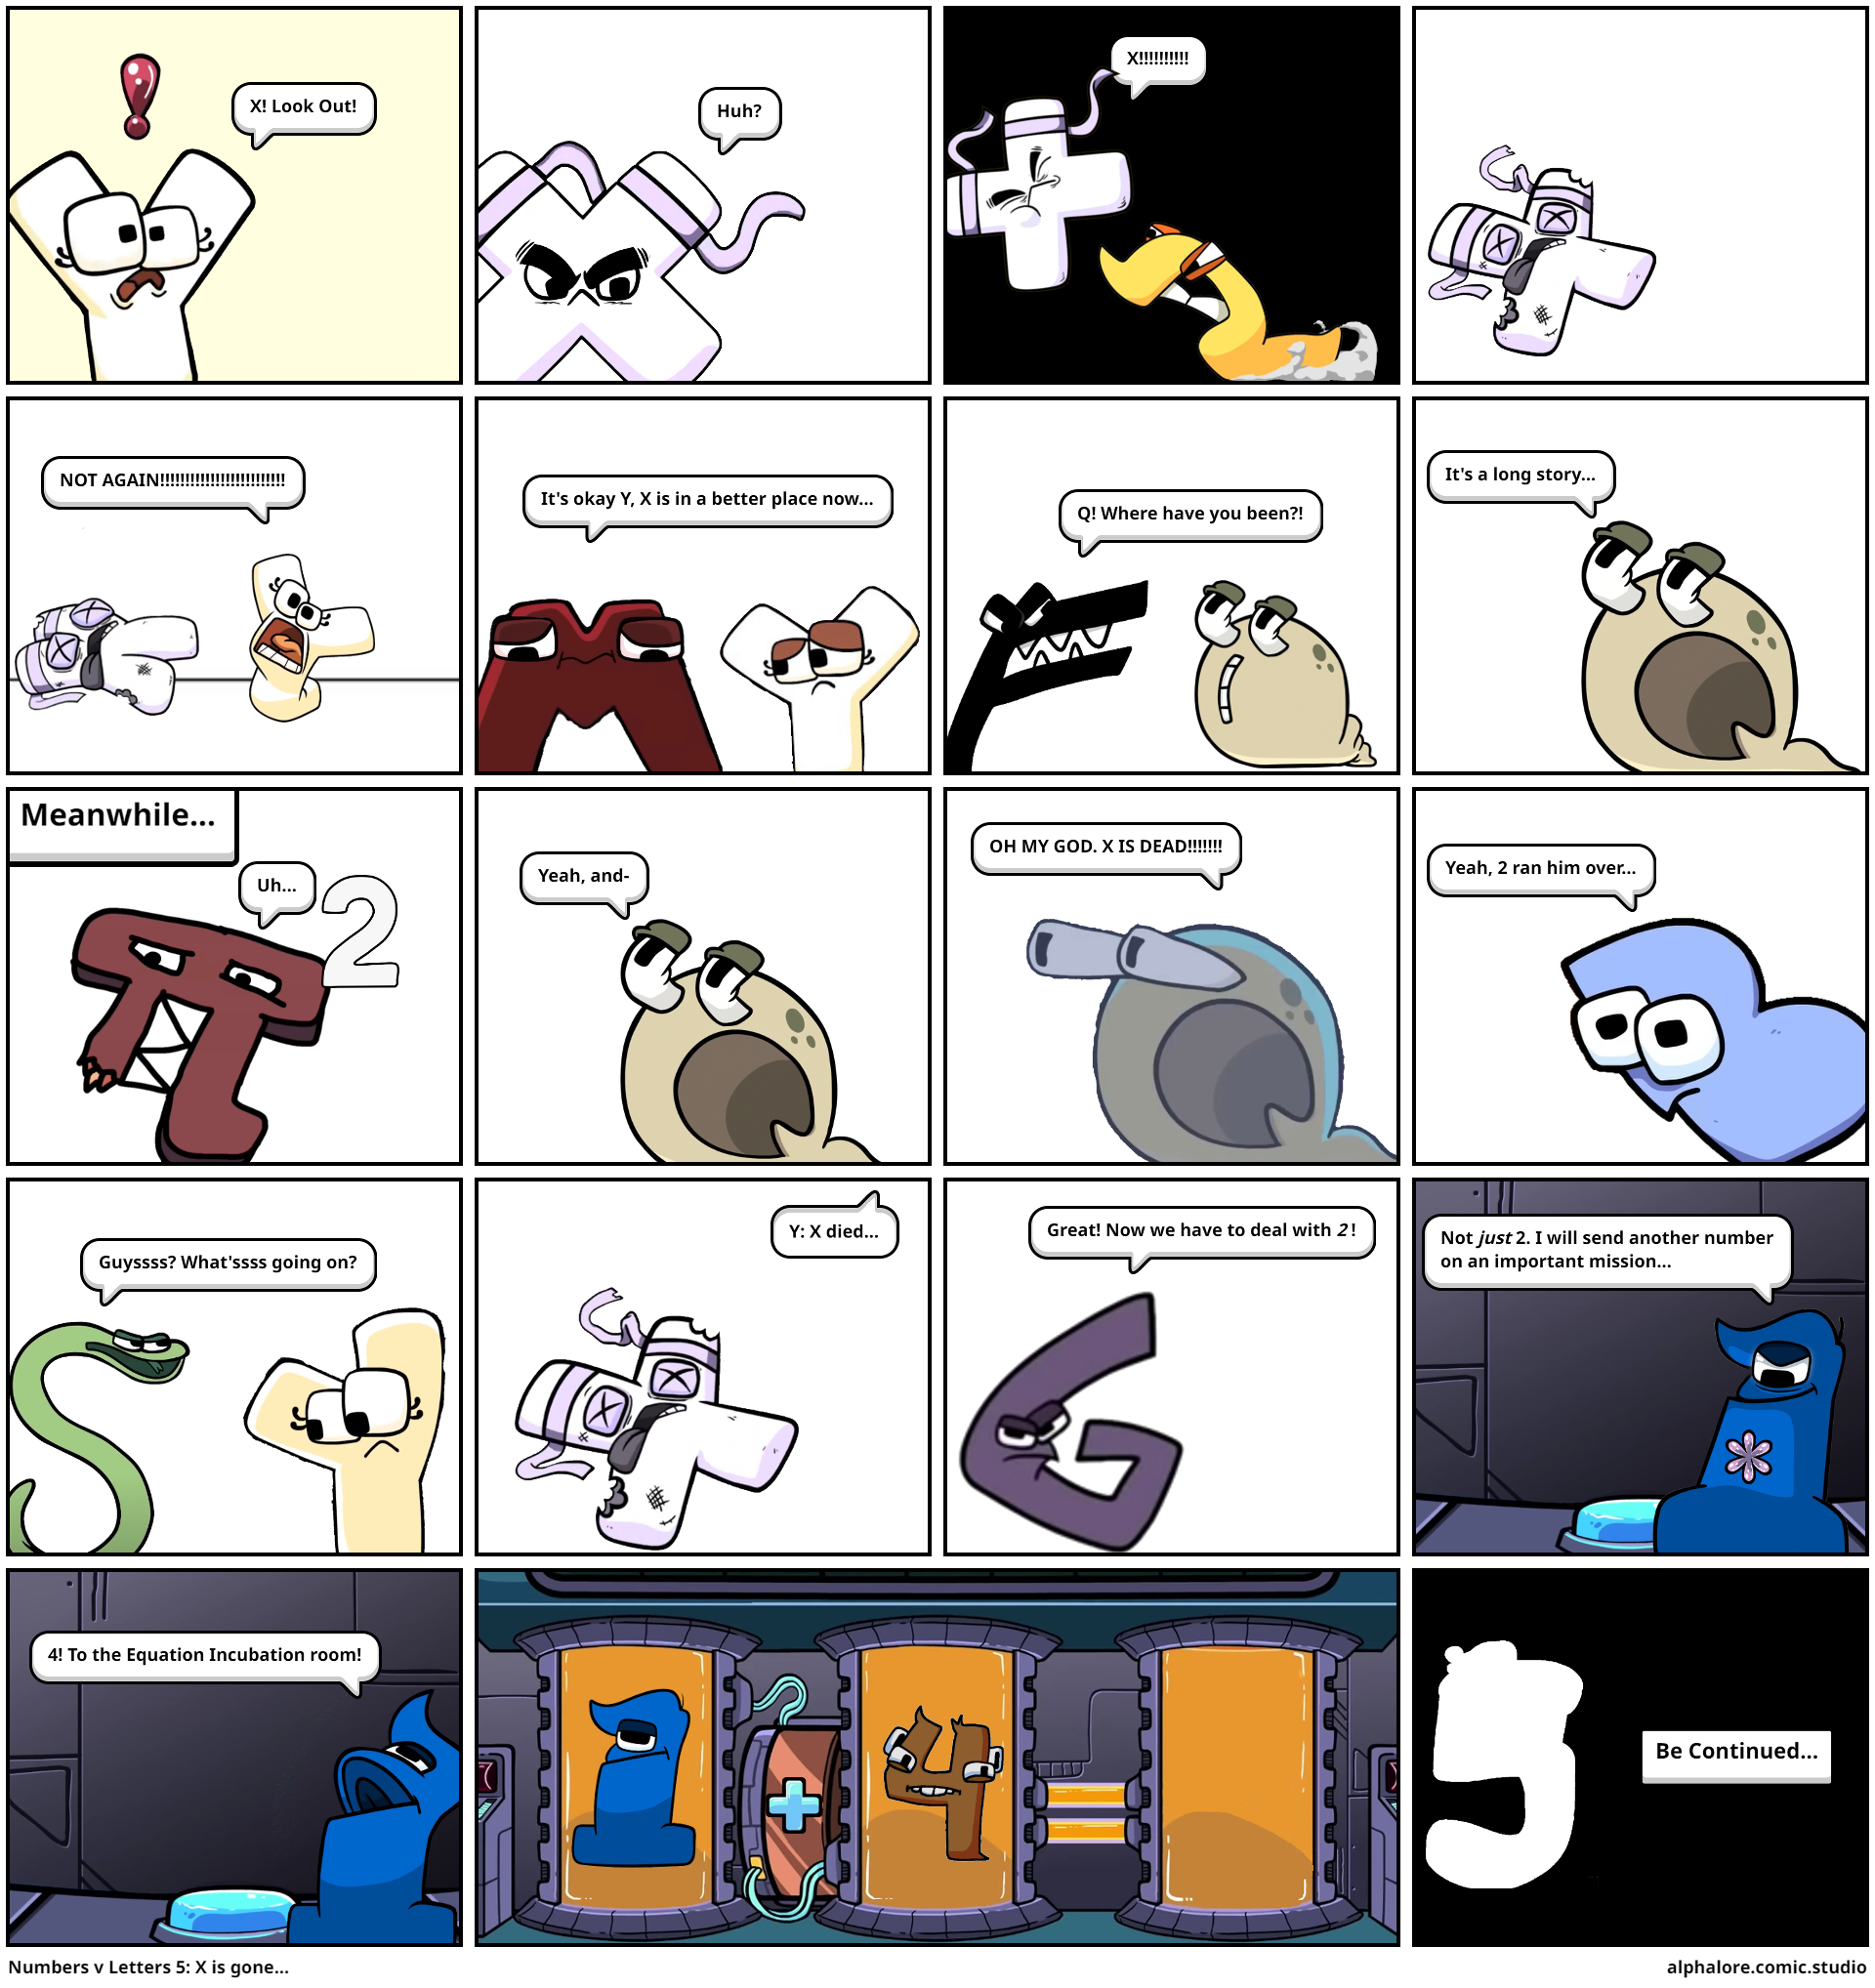 Number Lore - 1 to 5 (Alphabet Lore) - Comic Studio